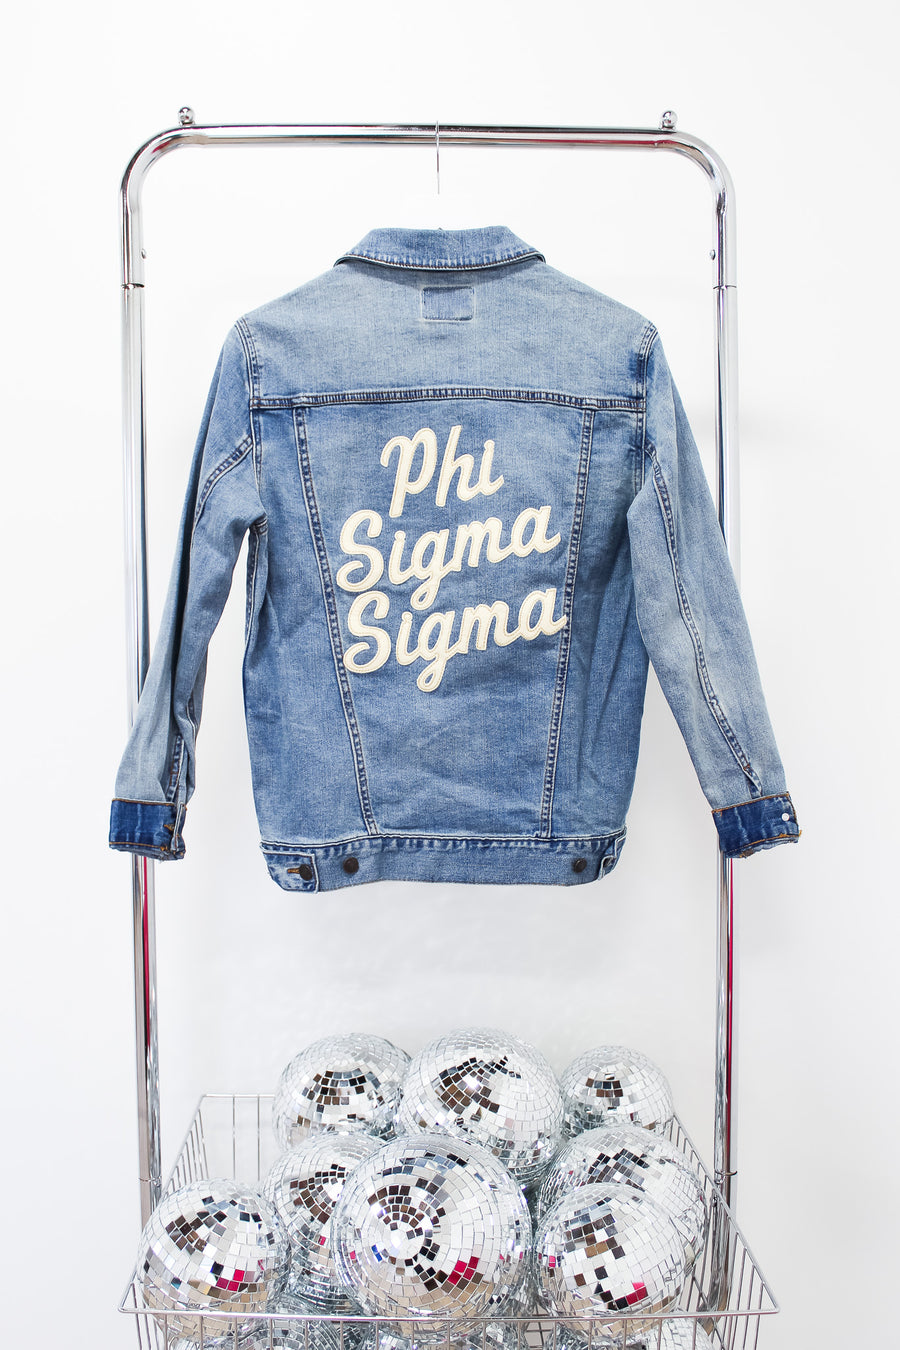 Phi Sigma Sigma Jean Jacket - SM